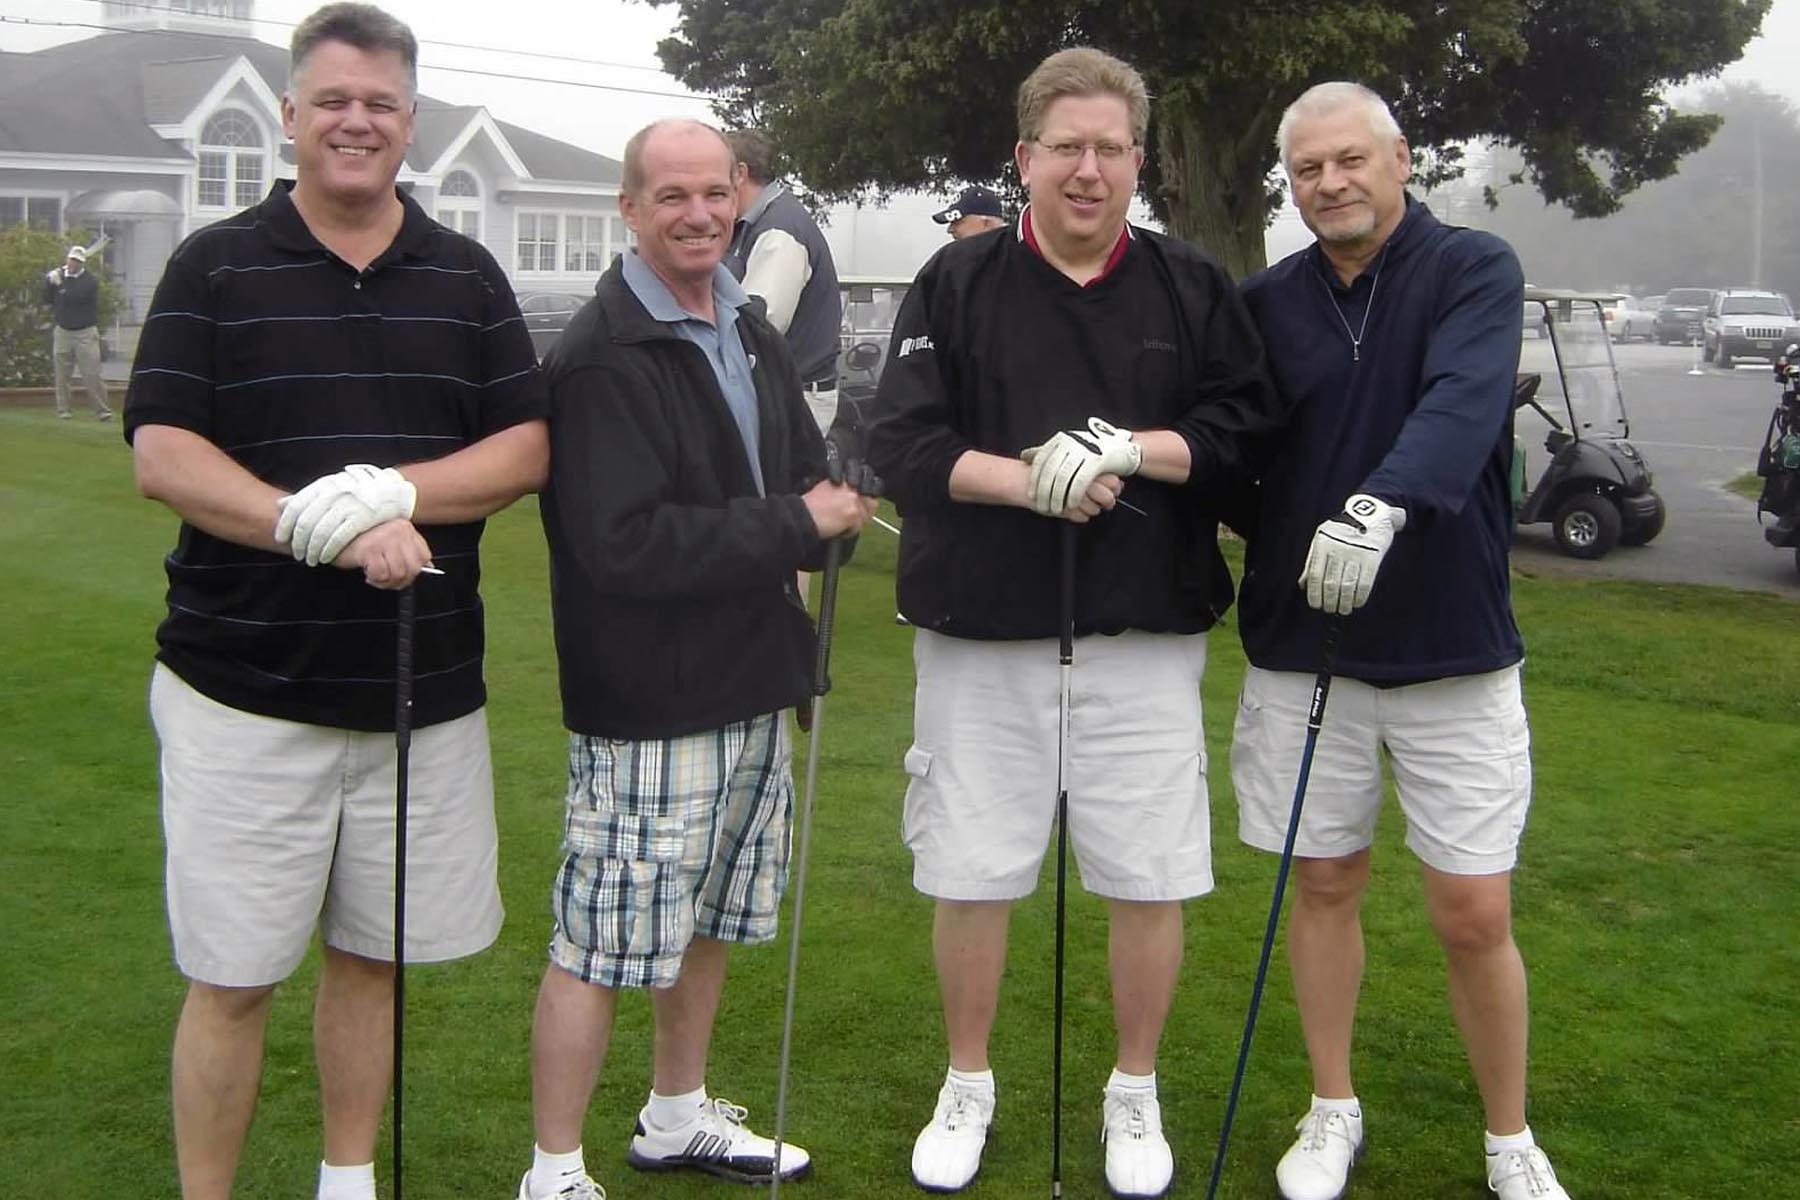  2012 Theta Chi Golf Open
L to R: Dan McTague, Bob Hunter, Vic Howe and John Wszalek 